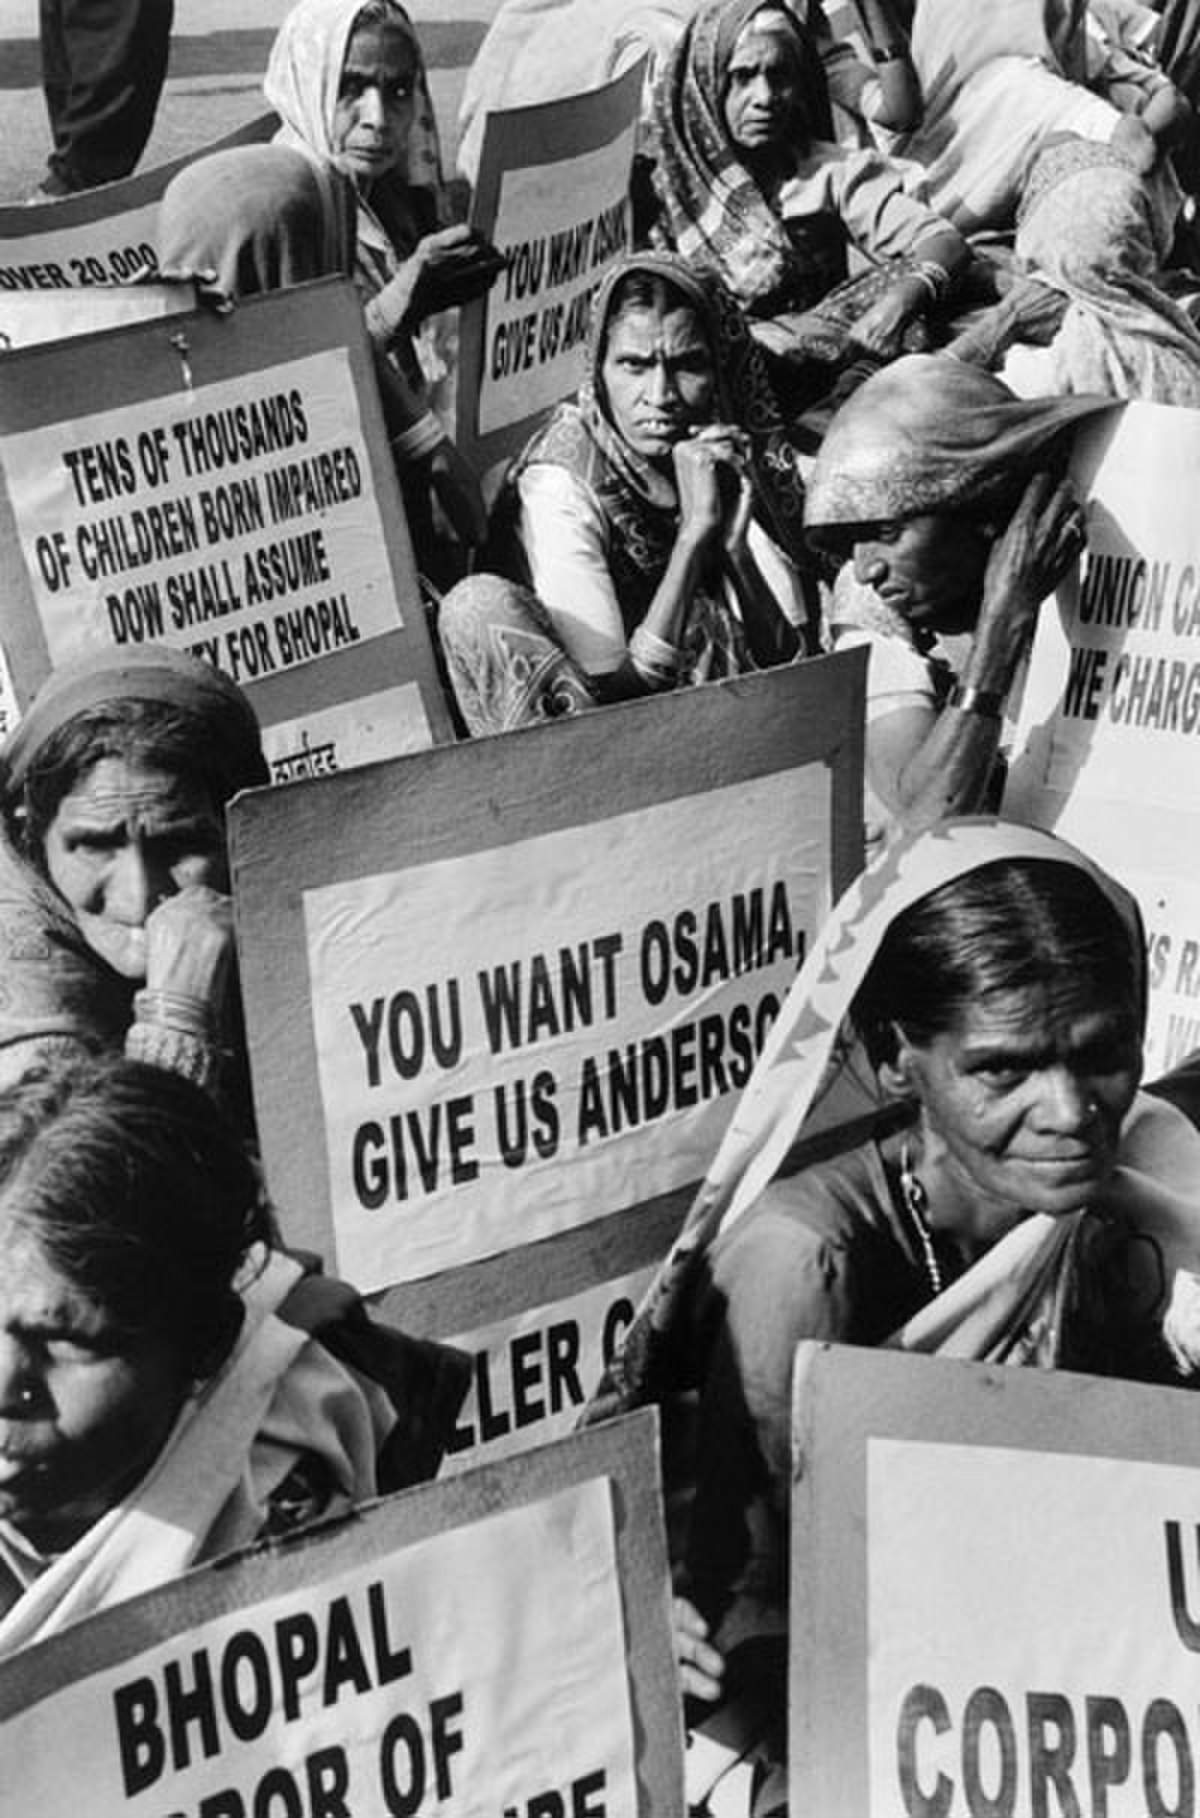 Bencana Bhopal